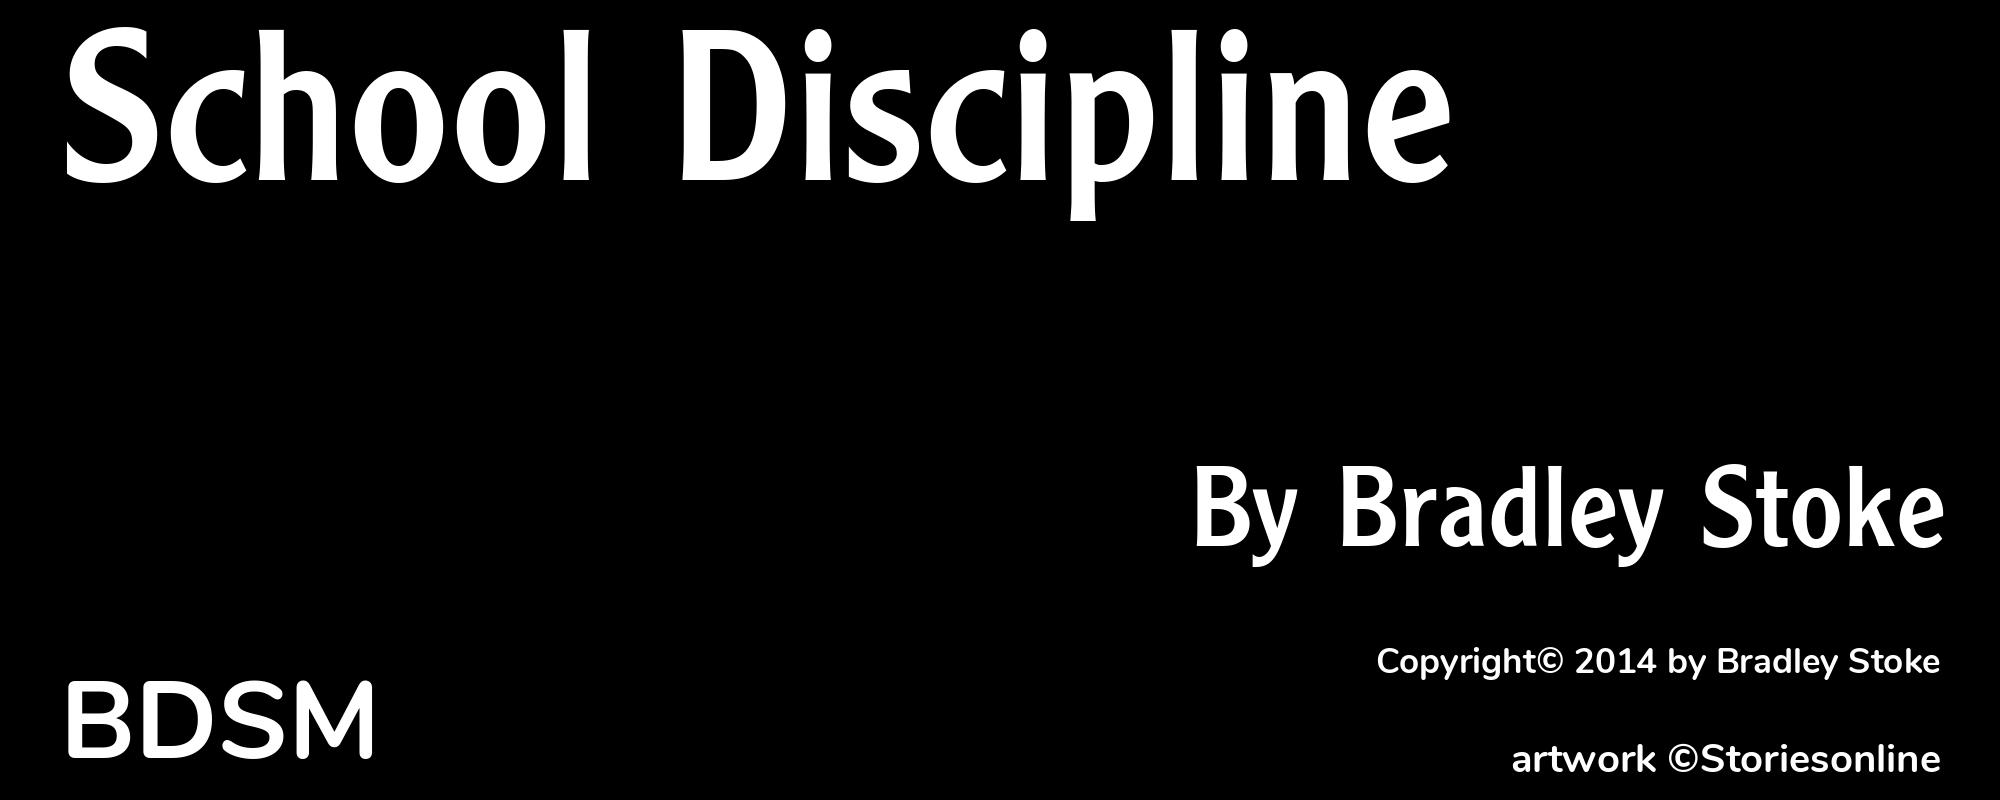 School Discipline - Cover